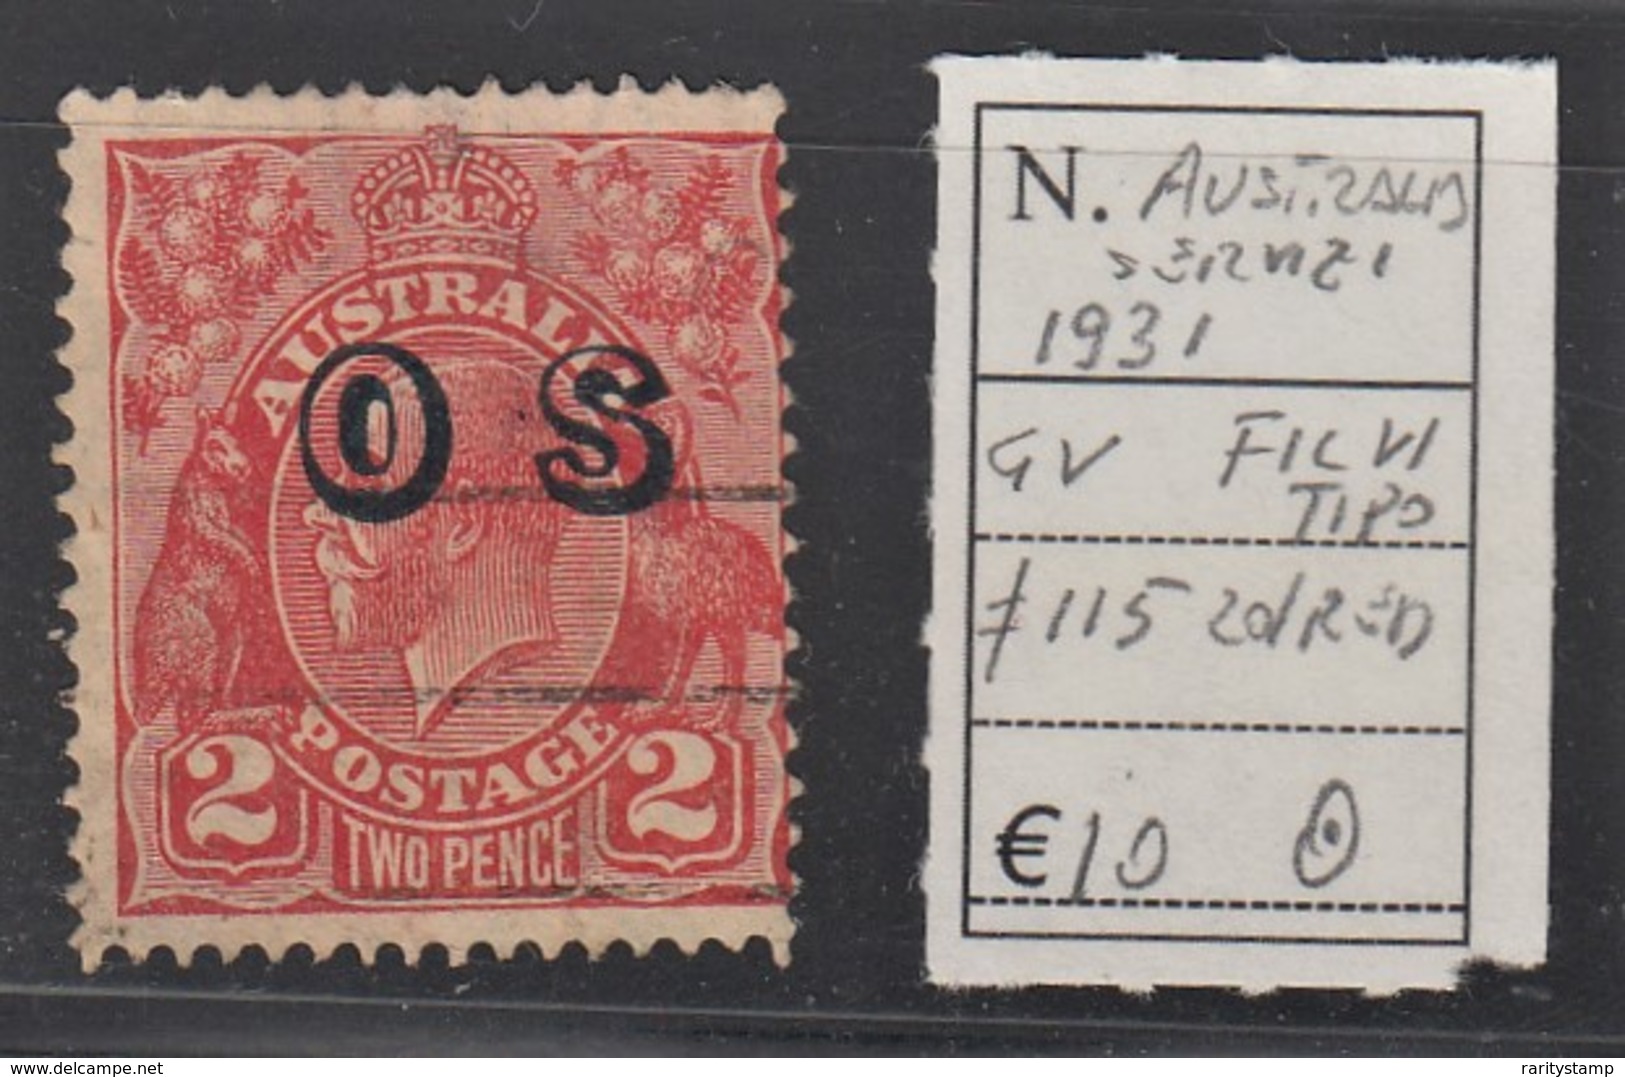 AUSTRALIA 1931 SERVIZI 2D RED N. 115 FIL. VI TIPO - Officials